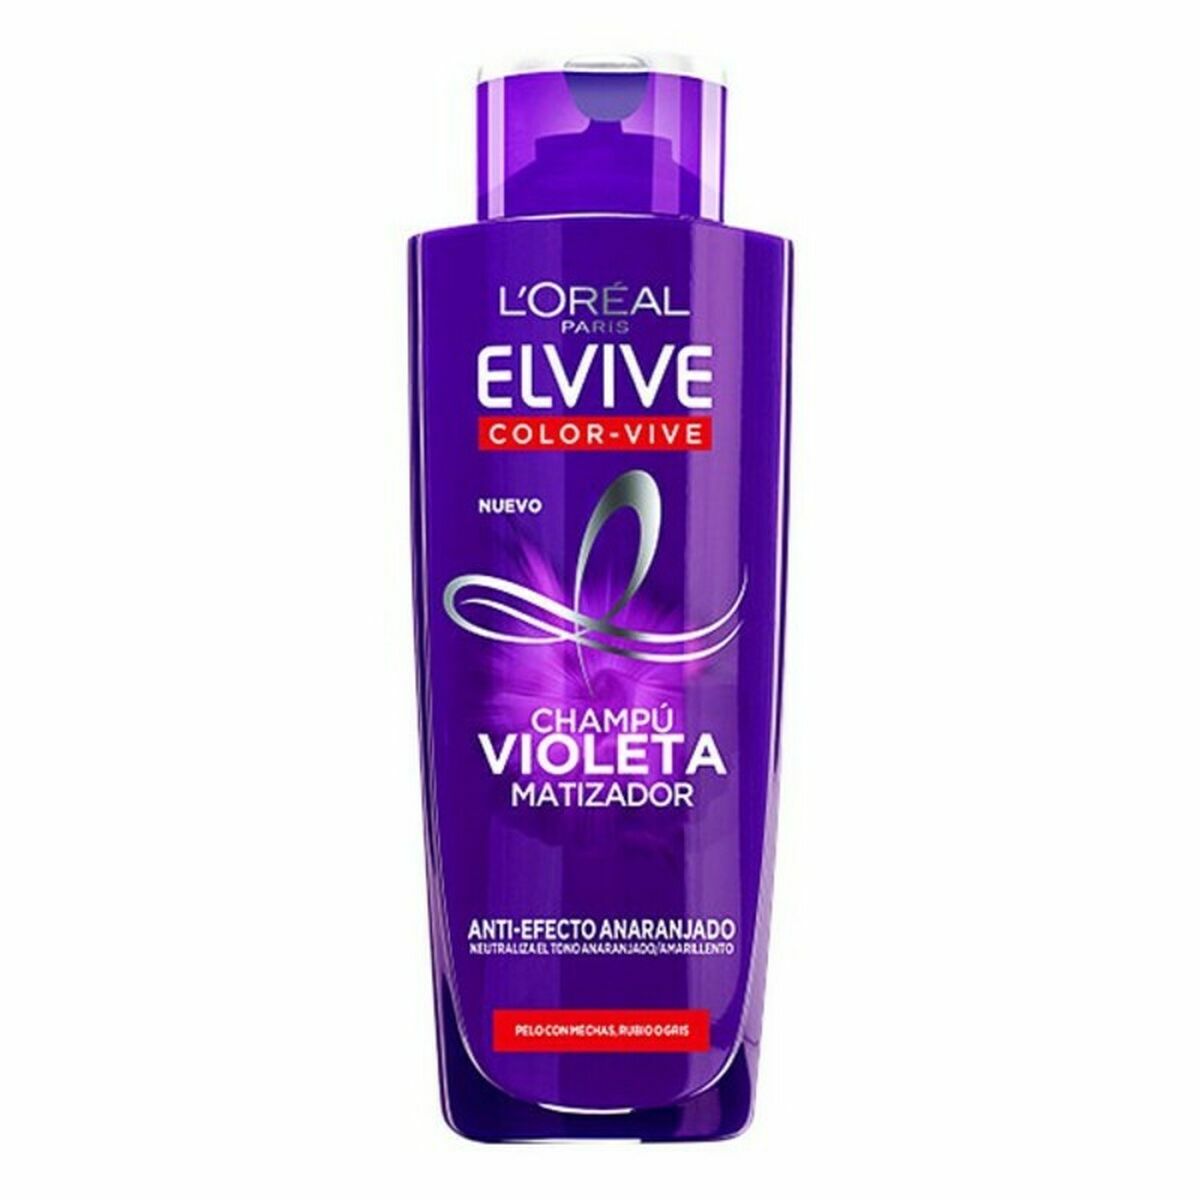 Shampoo for Coloured Hair Elvive Color-vive Violeta L'Oreal Make Up (200 ml)-0